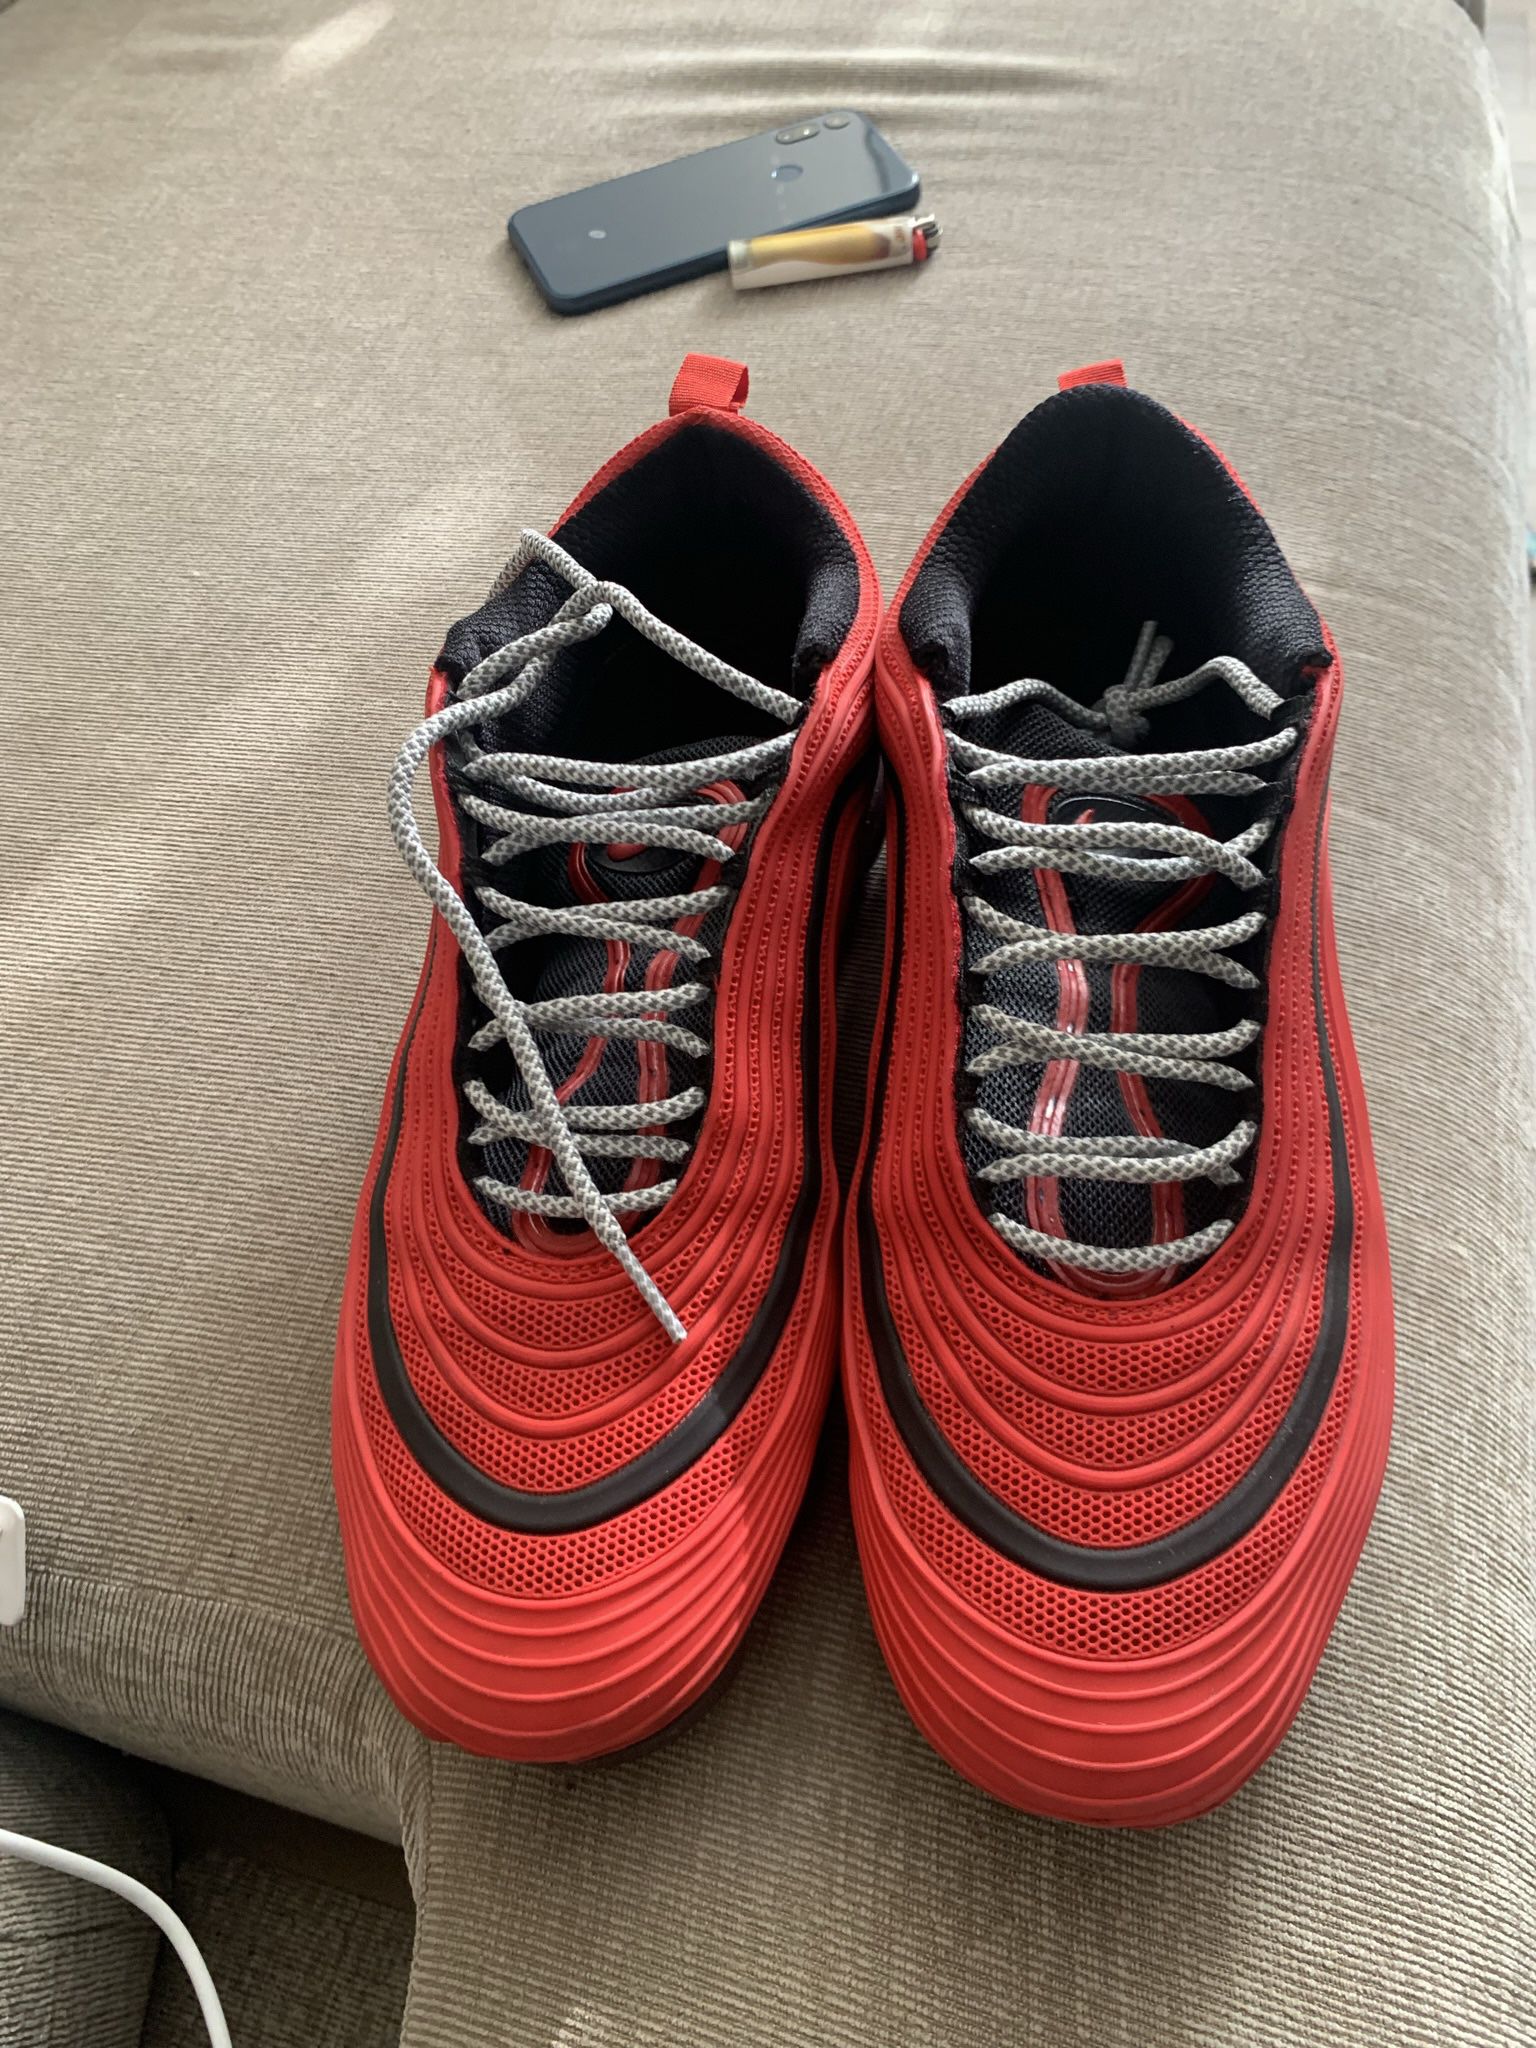 Nike Vapormax Size 11